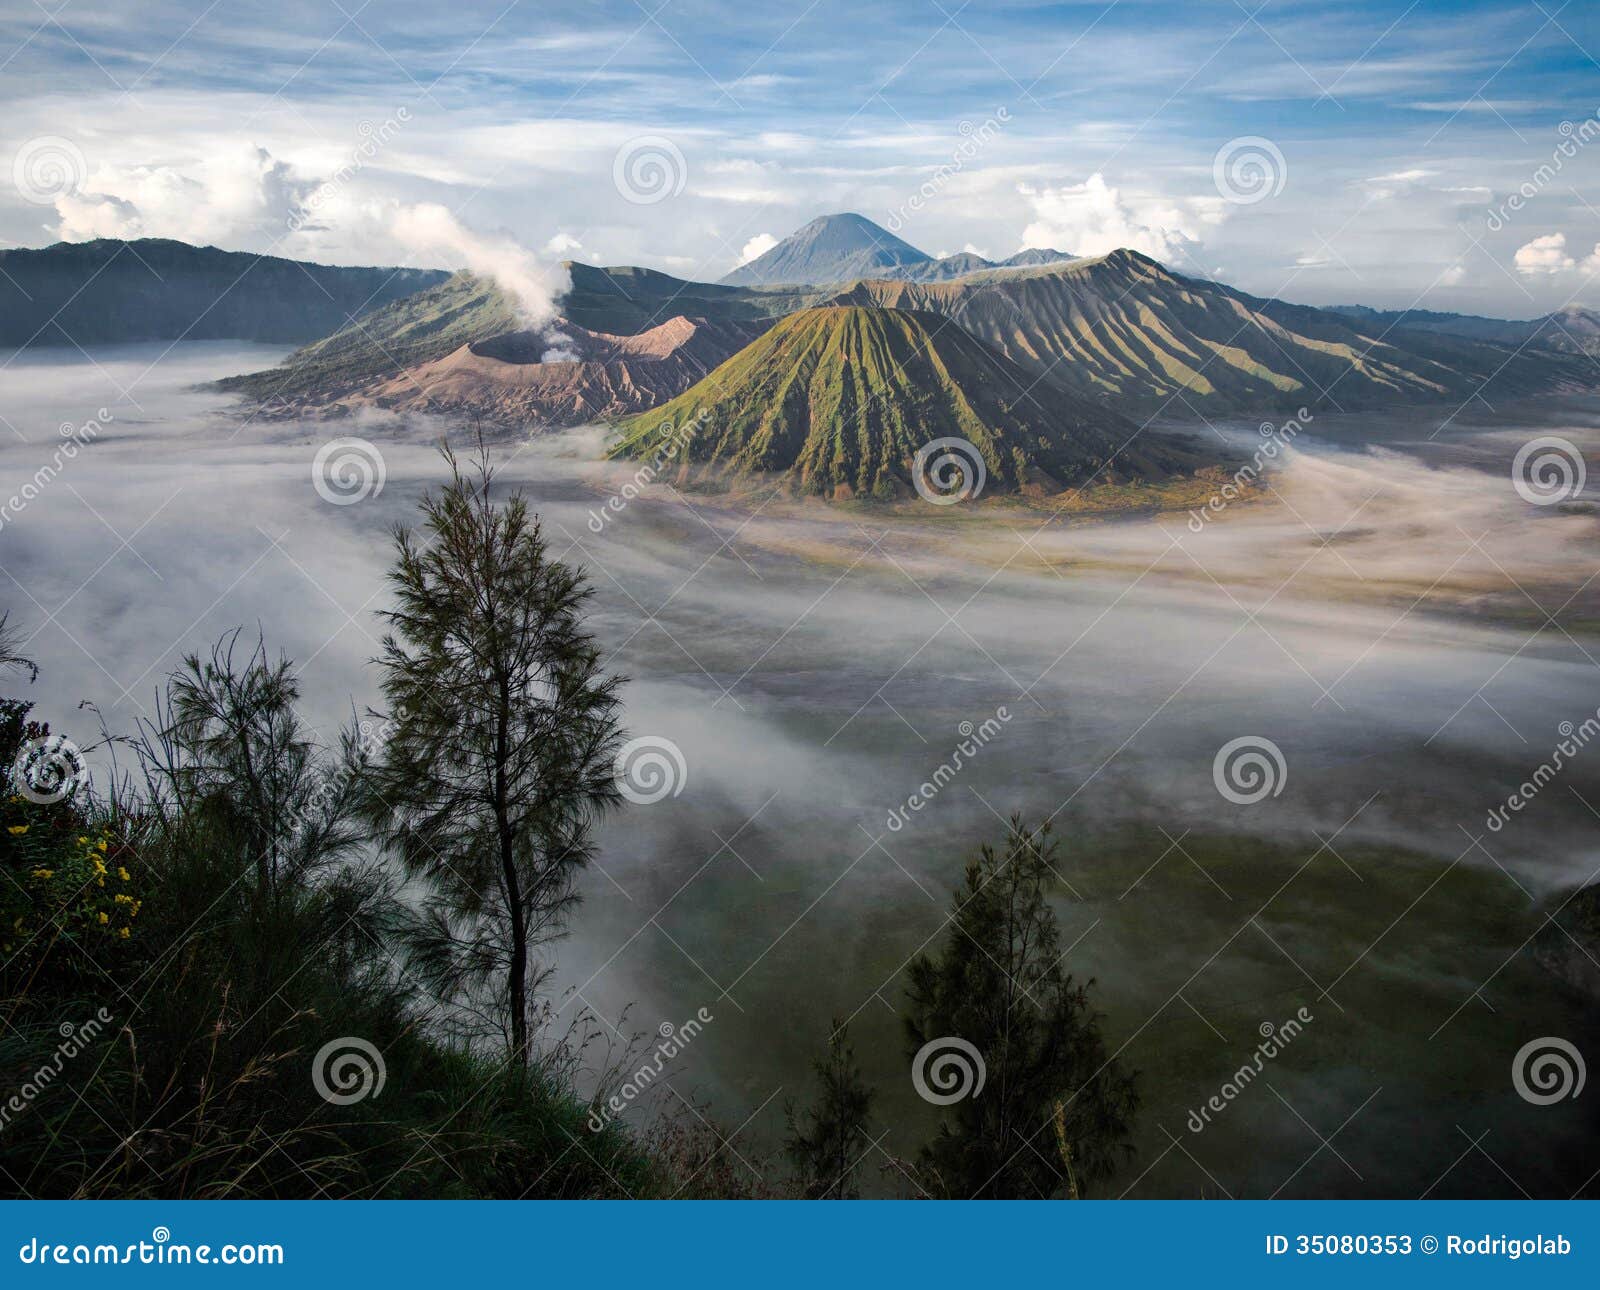 Gunung Bromo, Mount Batok And Gunung Semeru Stock Image ...